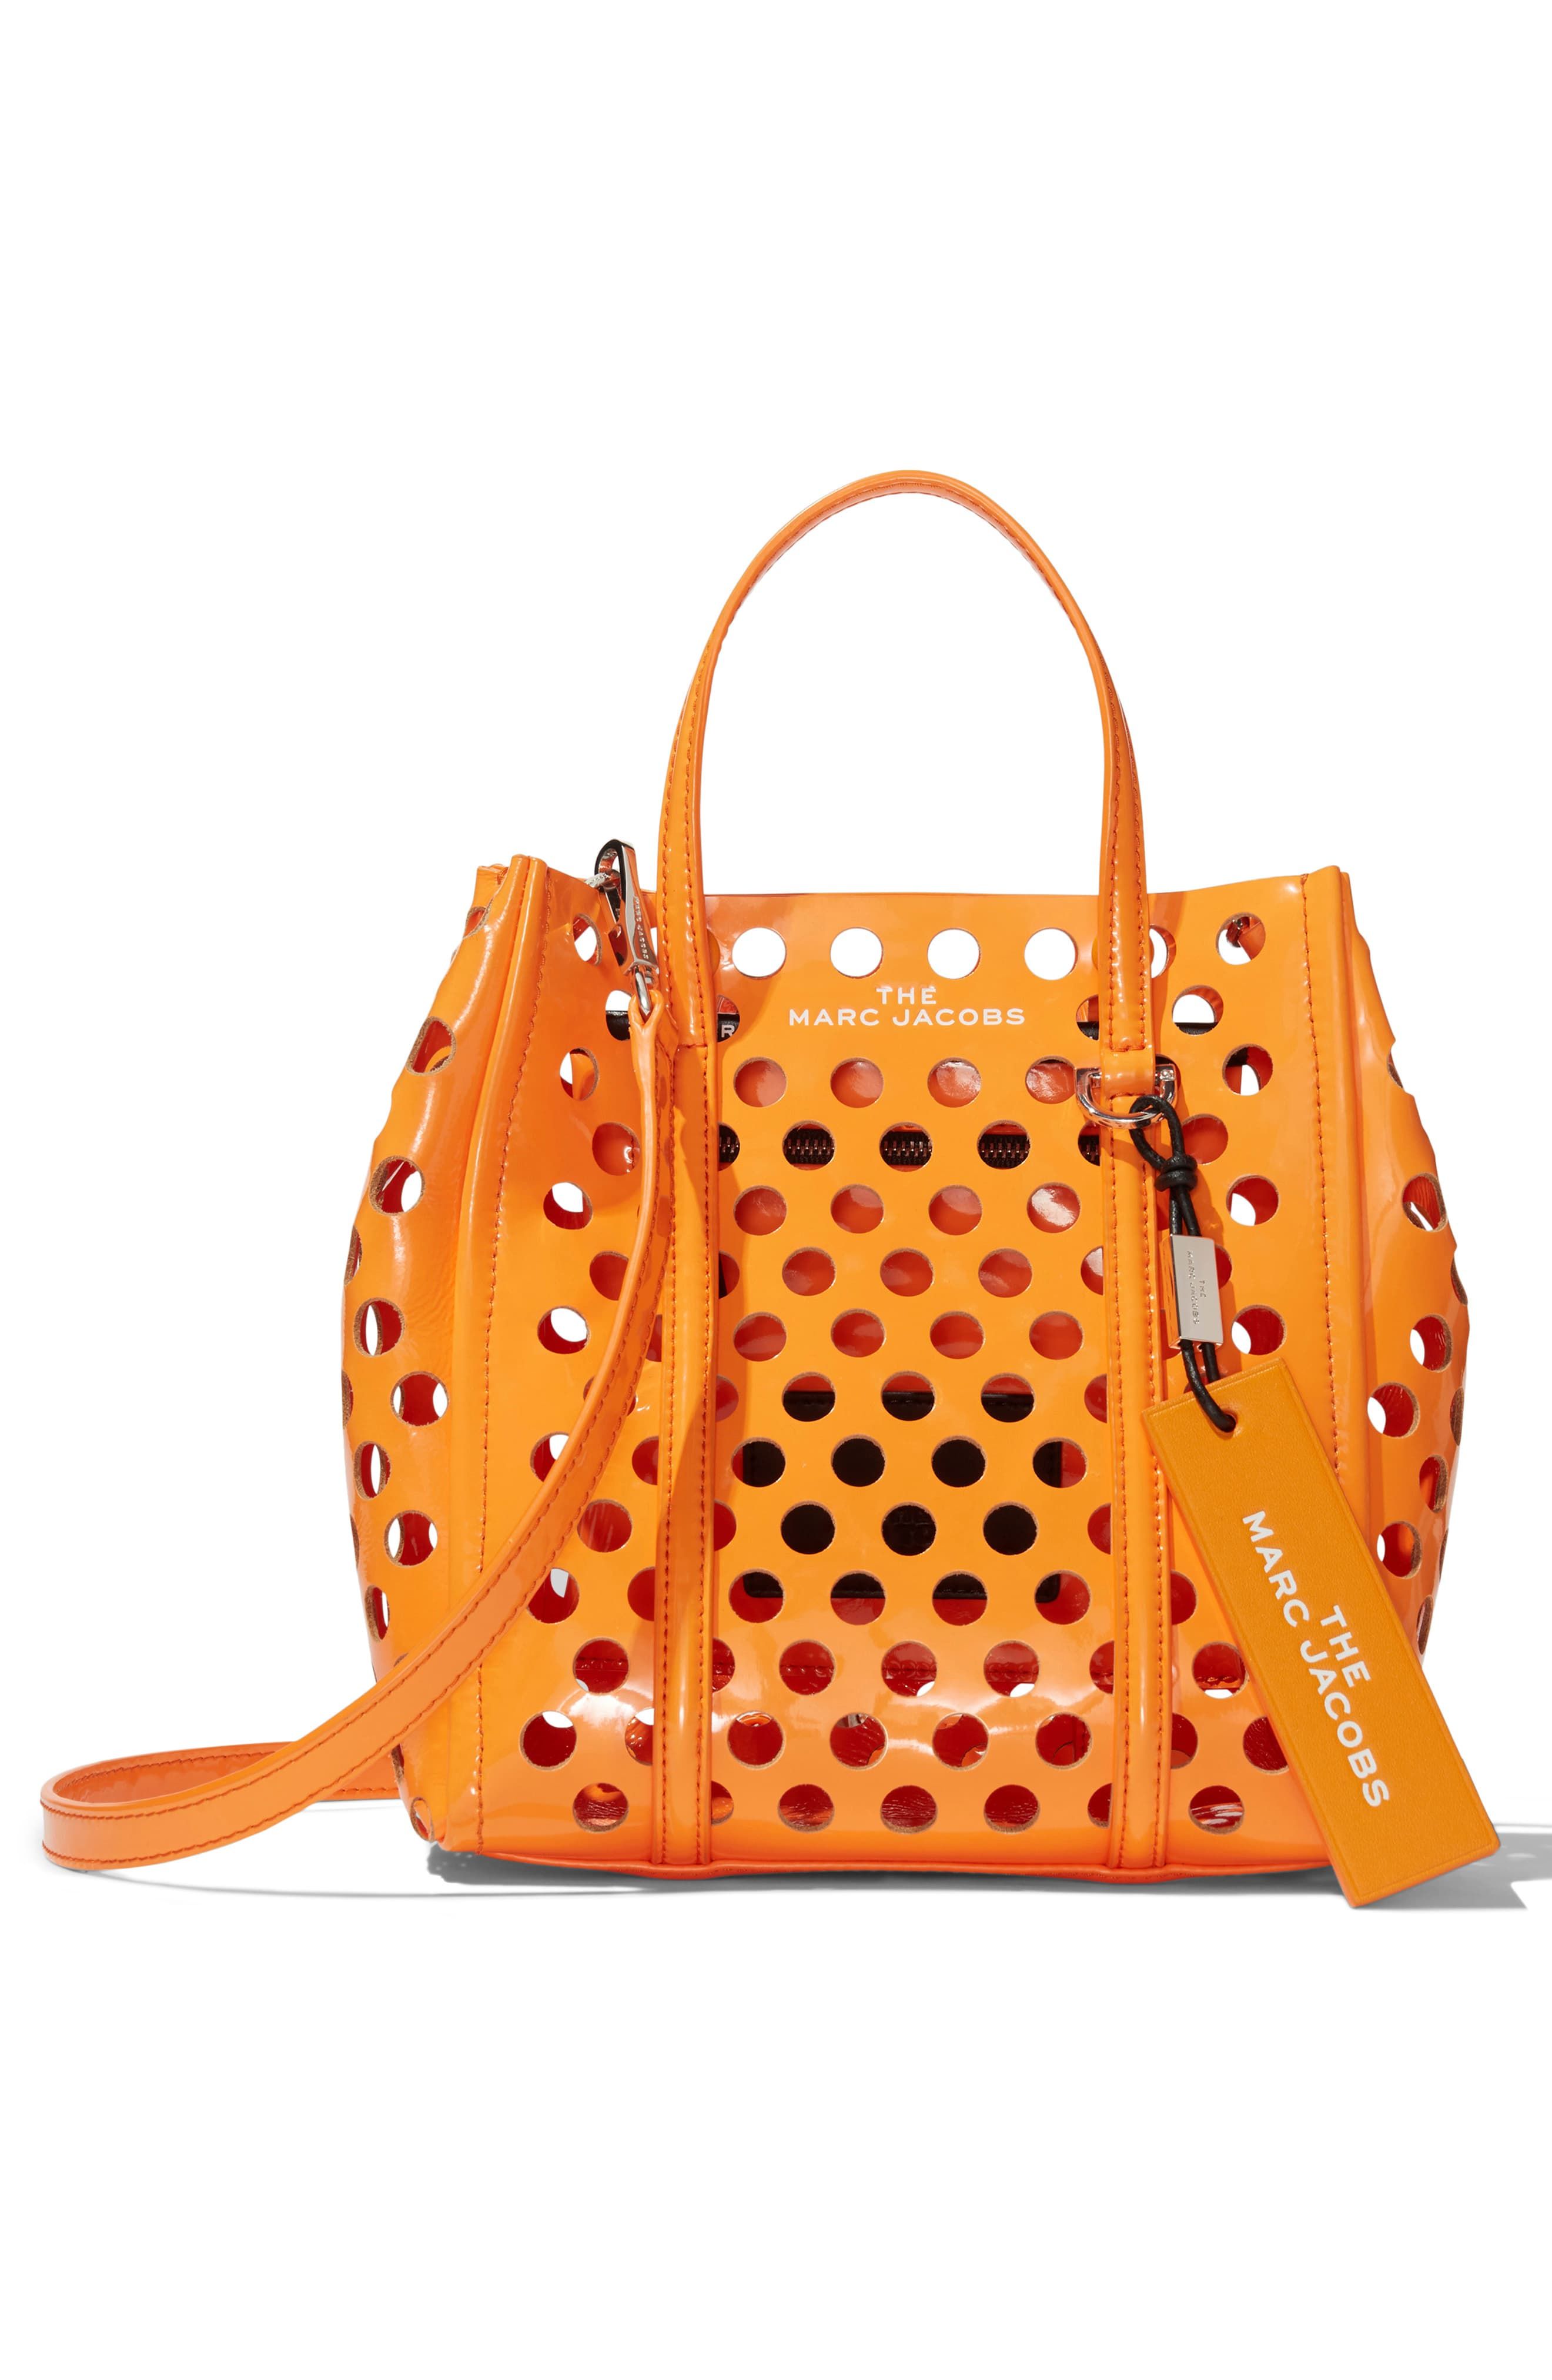 Libermall Fashion Women’S Cute Fruit Packet Round Lemon Shoulder Bag Crossbody Bags Purse Bags For Women Clearance Sale 